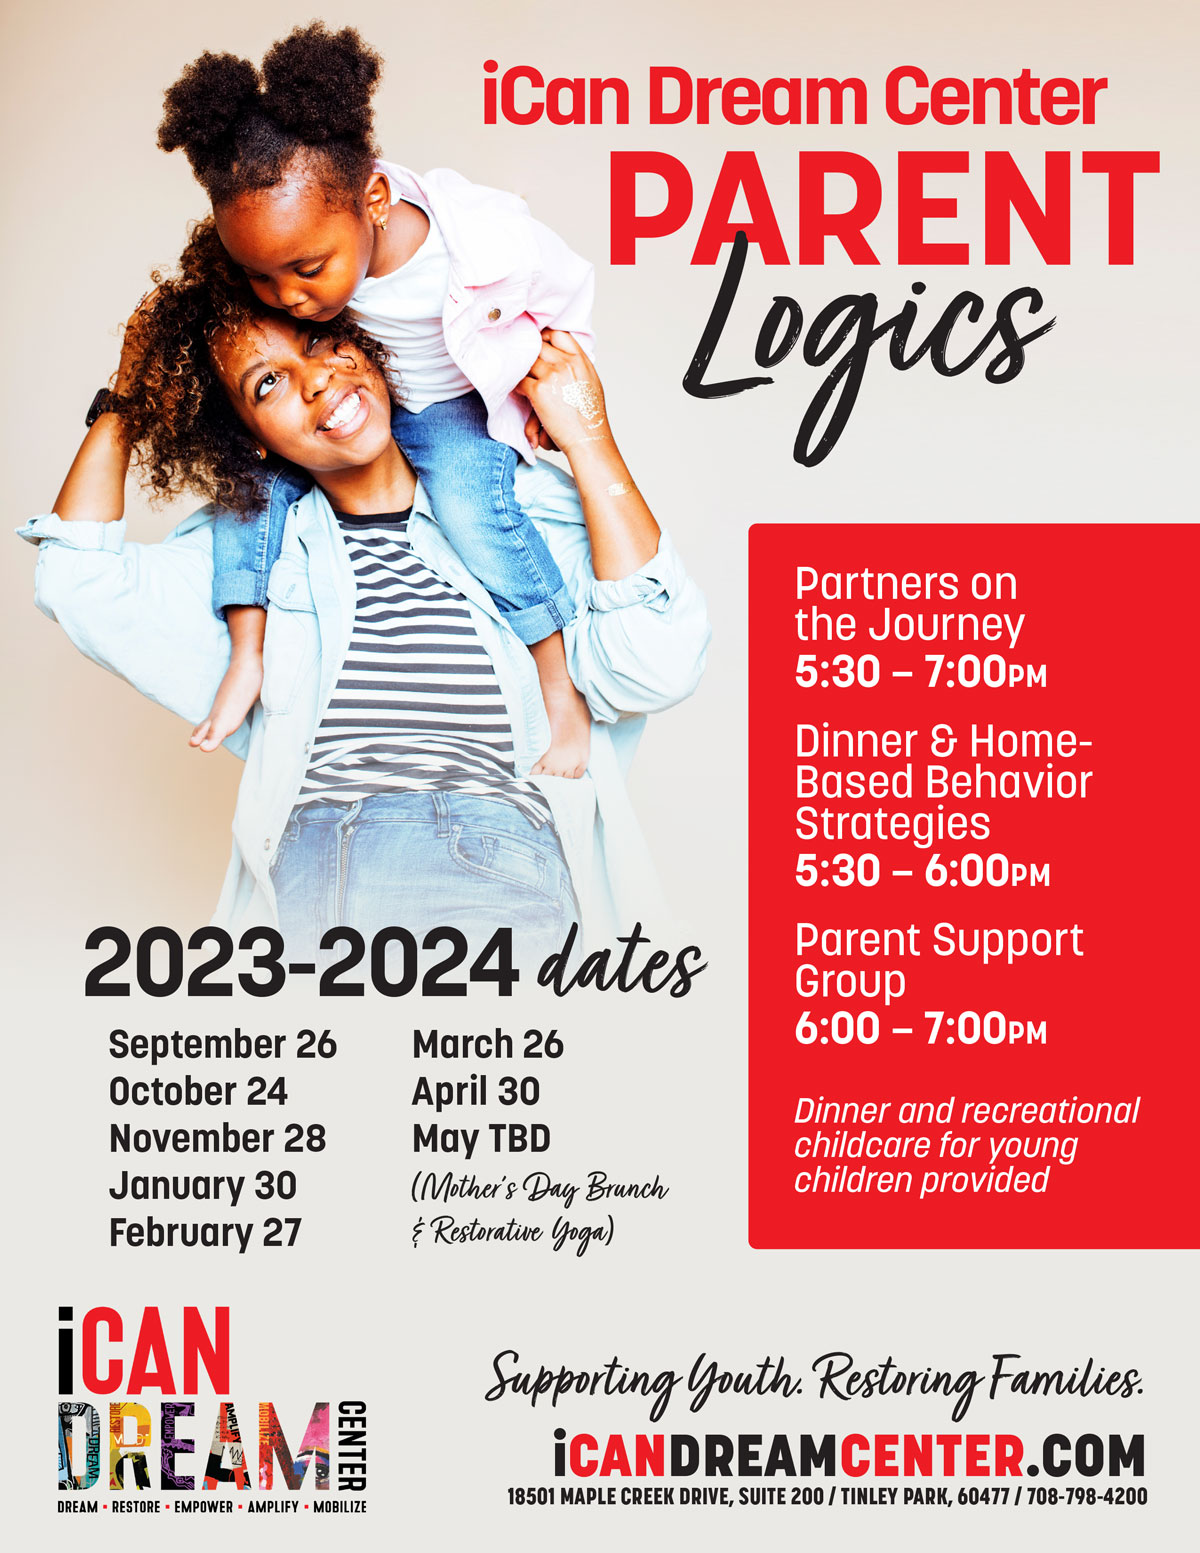 iCan Dream Center Parent Logics (Mar. 26)